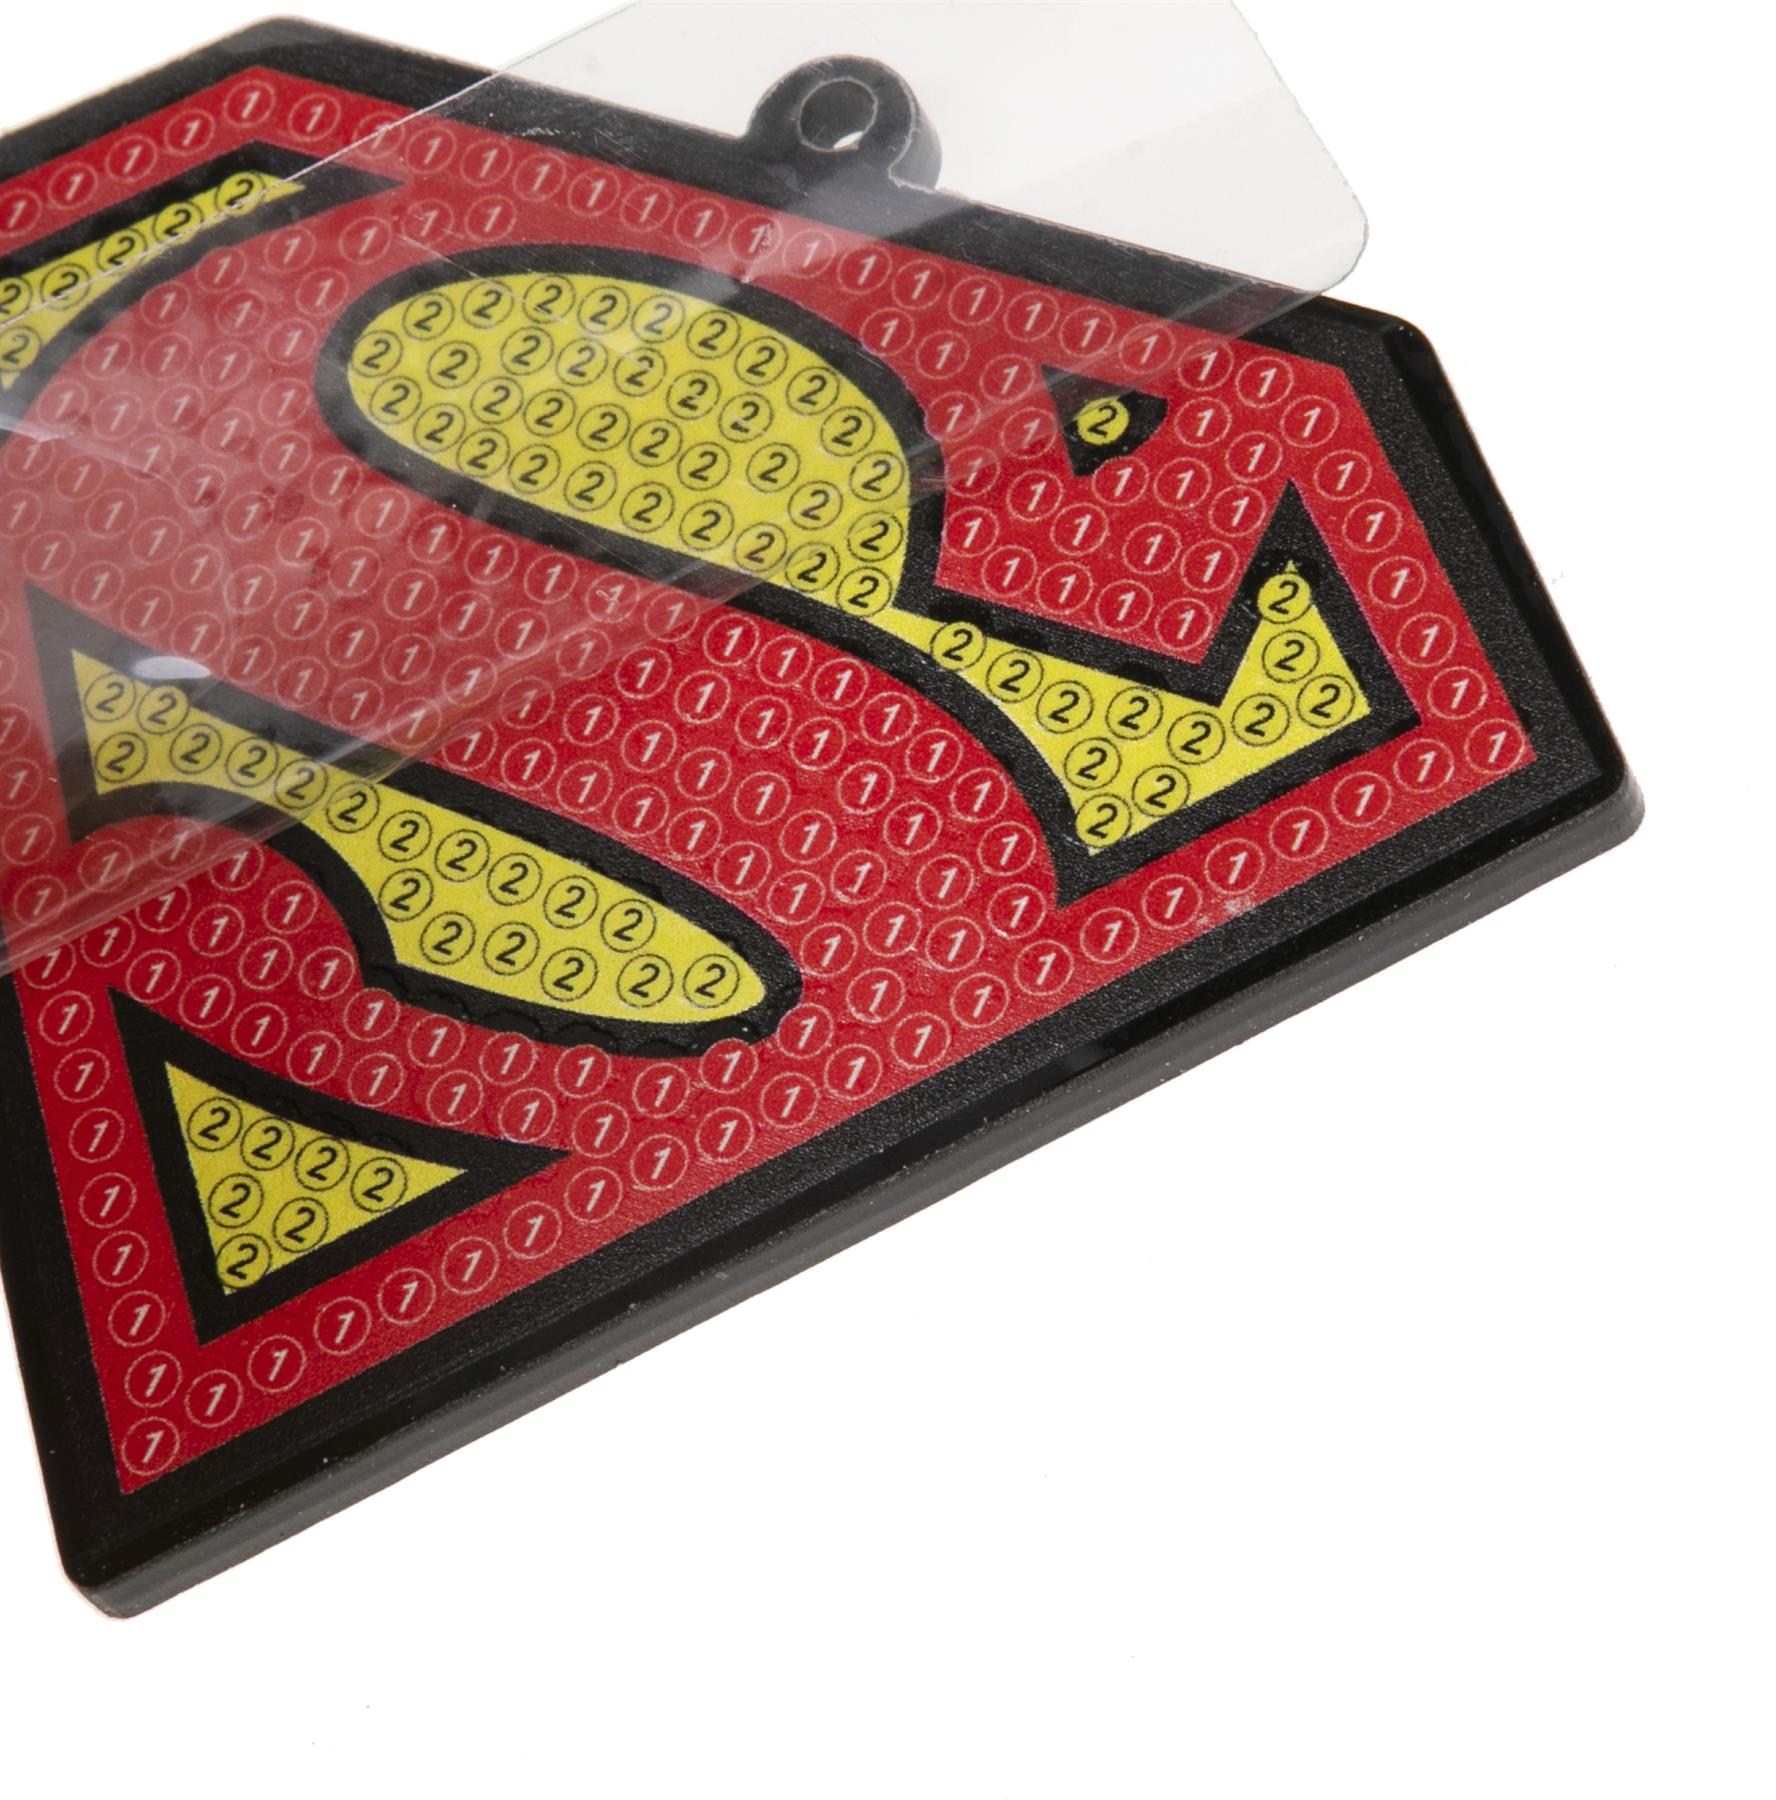 DC Superman Crystal Art Backpack Charm Kit